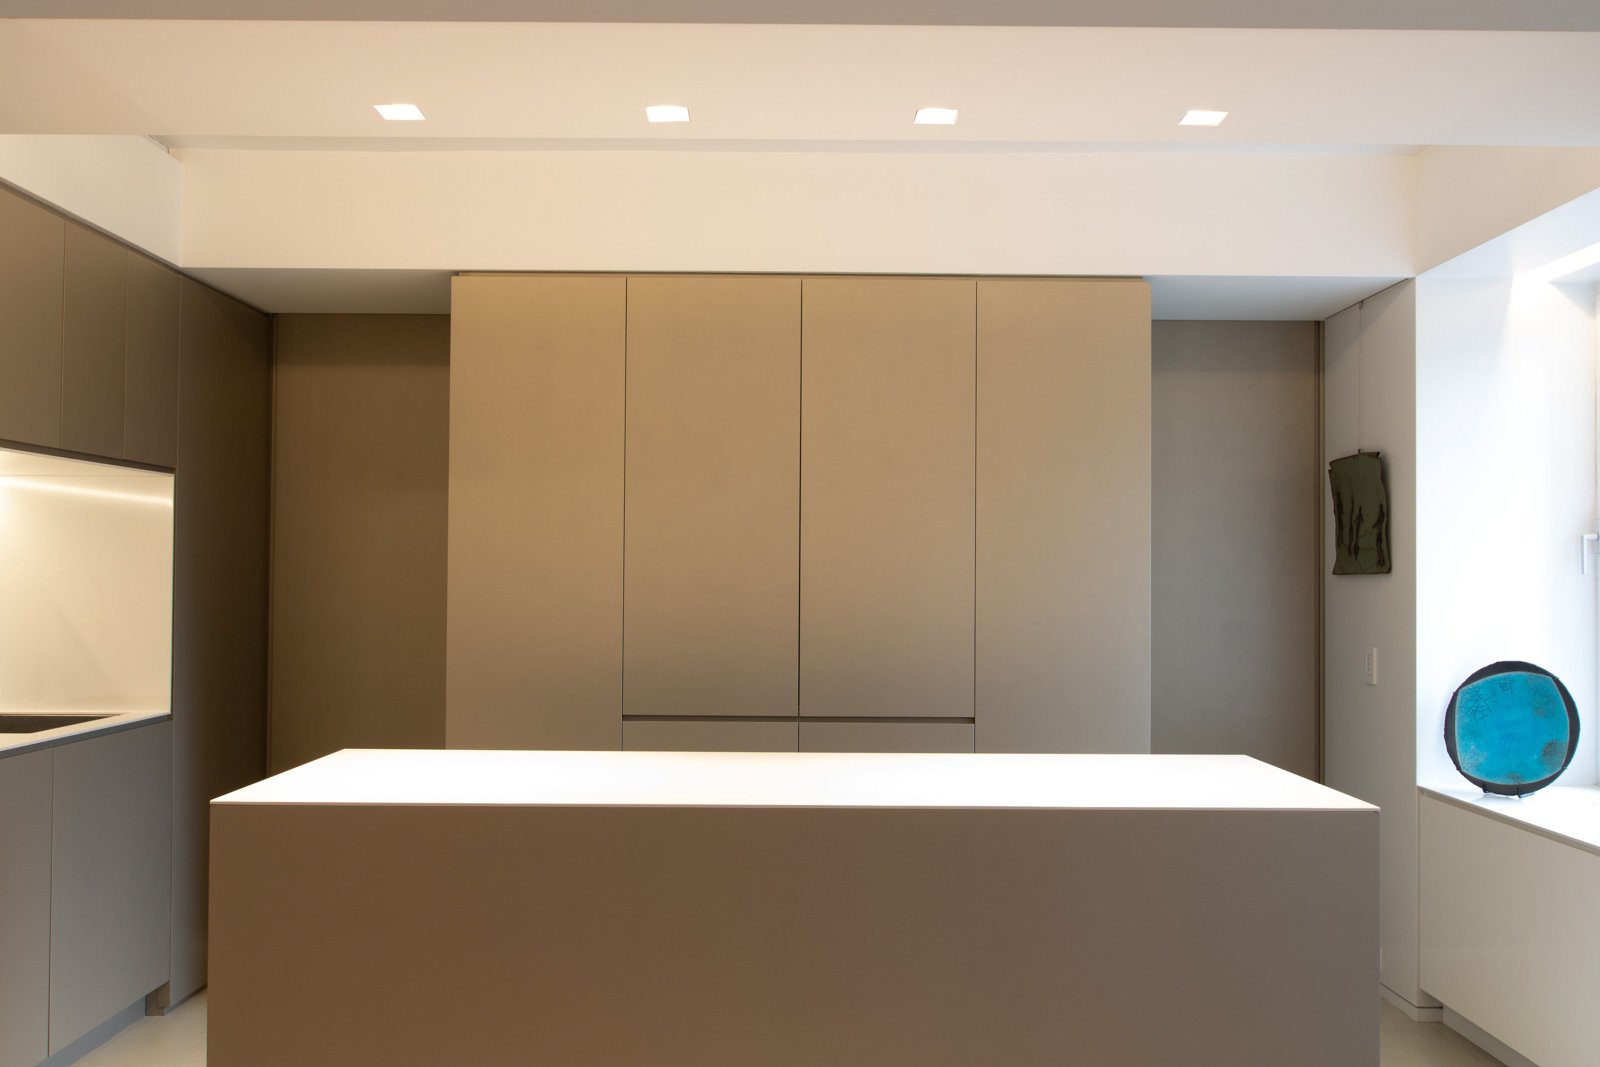 07-res4-resolution-4-architecture-modern-apartment-renovation-nyc-pied-a-terre-kitchen-custom-island-cabinets-metallic-millwork-built-ins-hidden-pocket-doors-appliance-garage.jpg